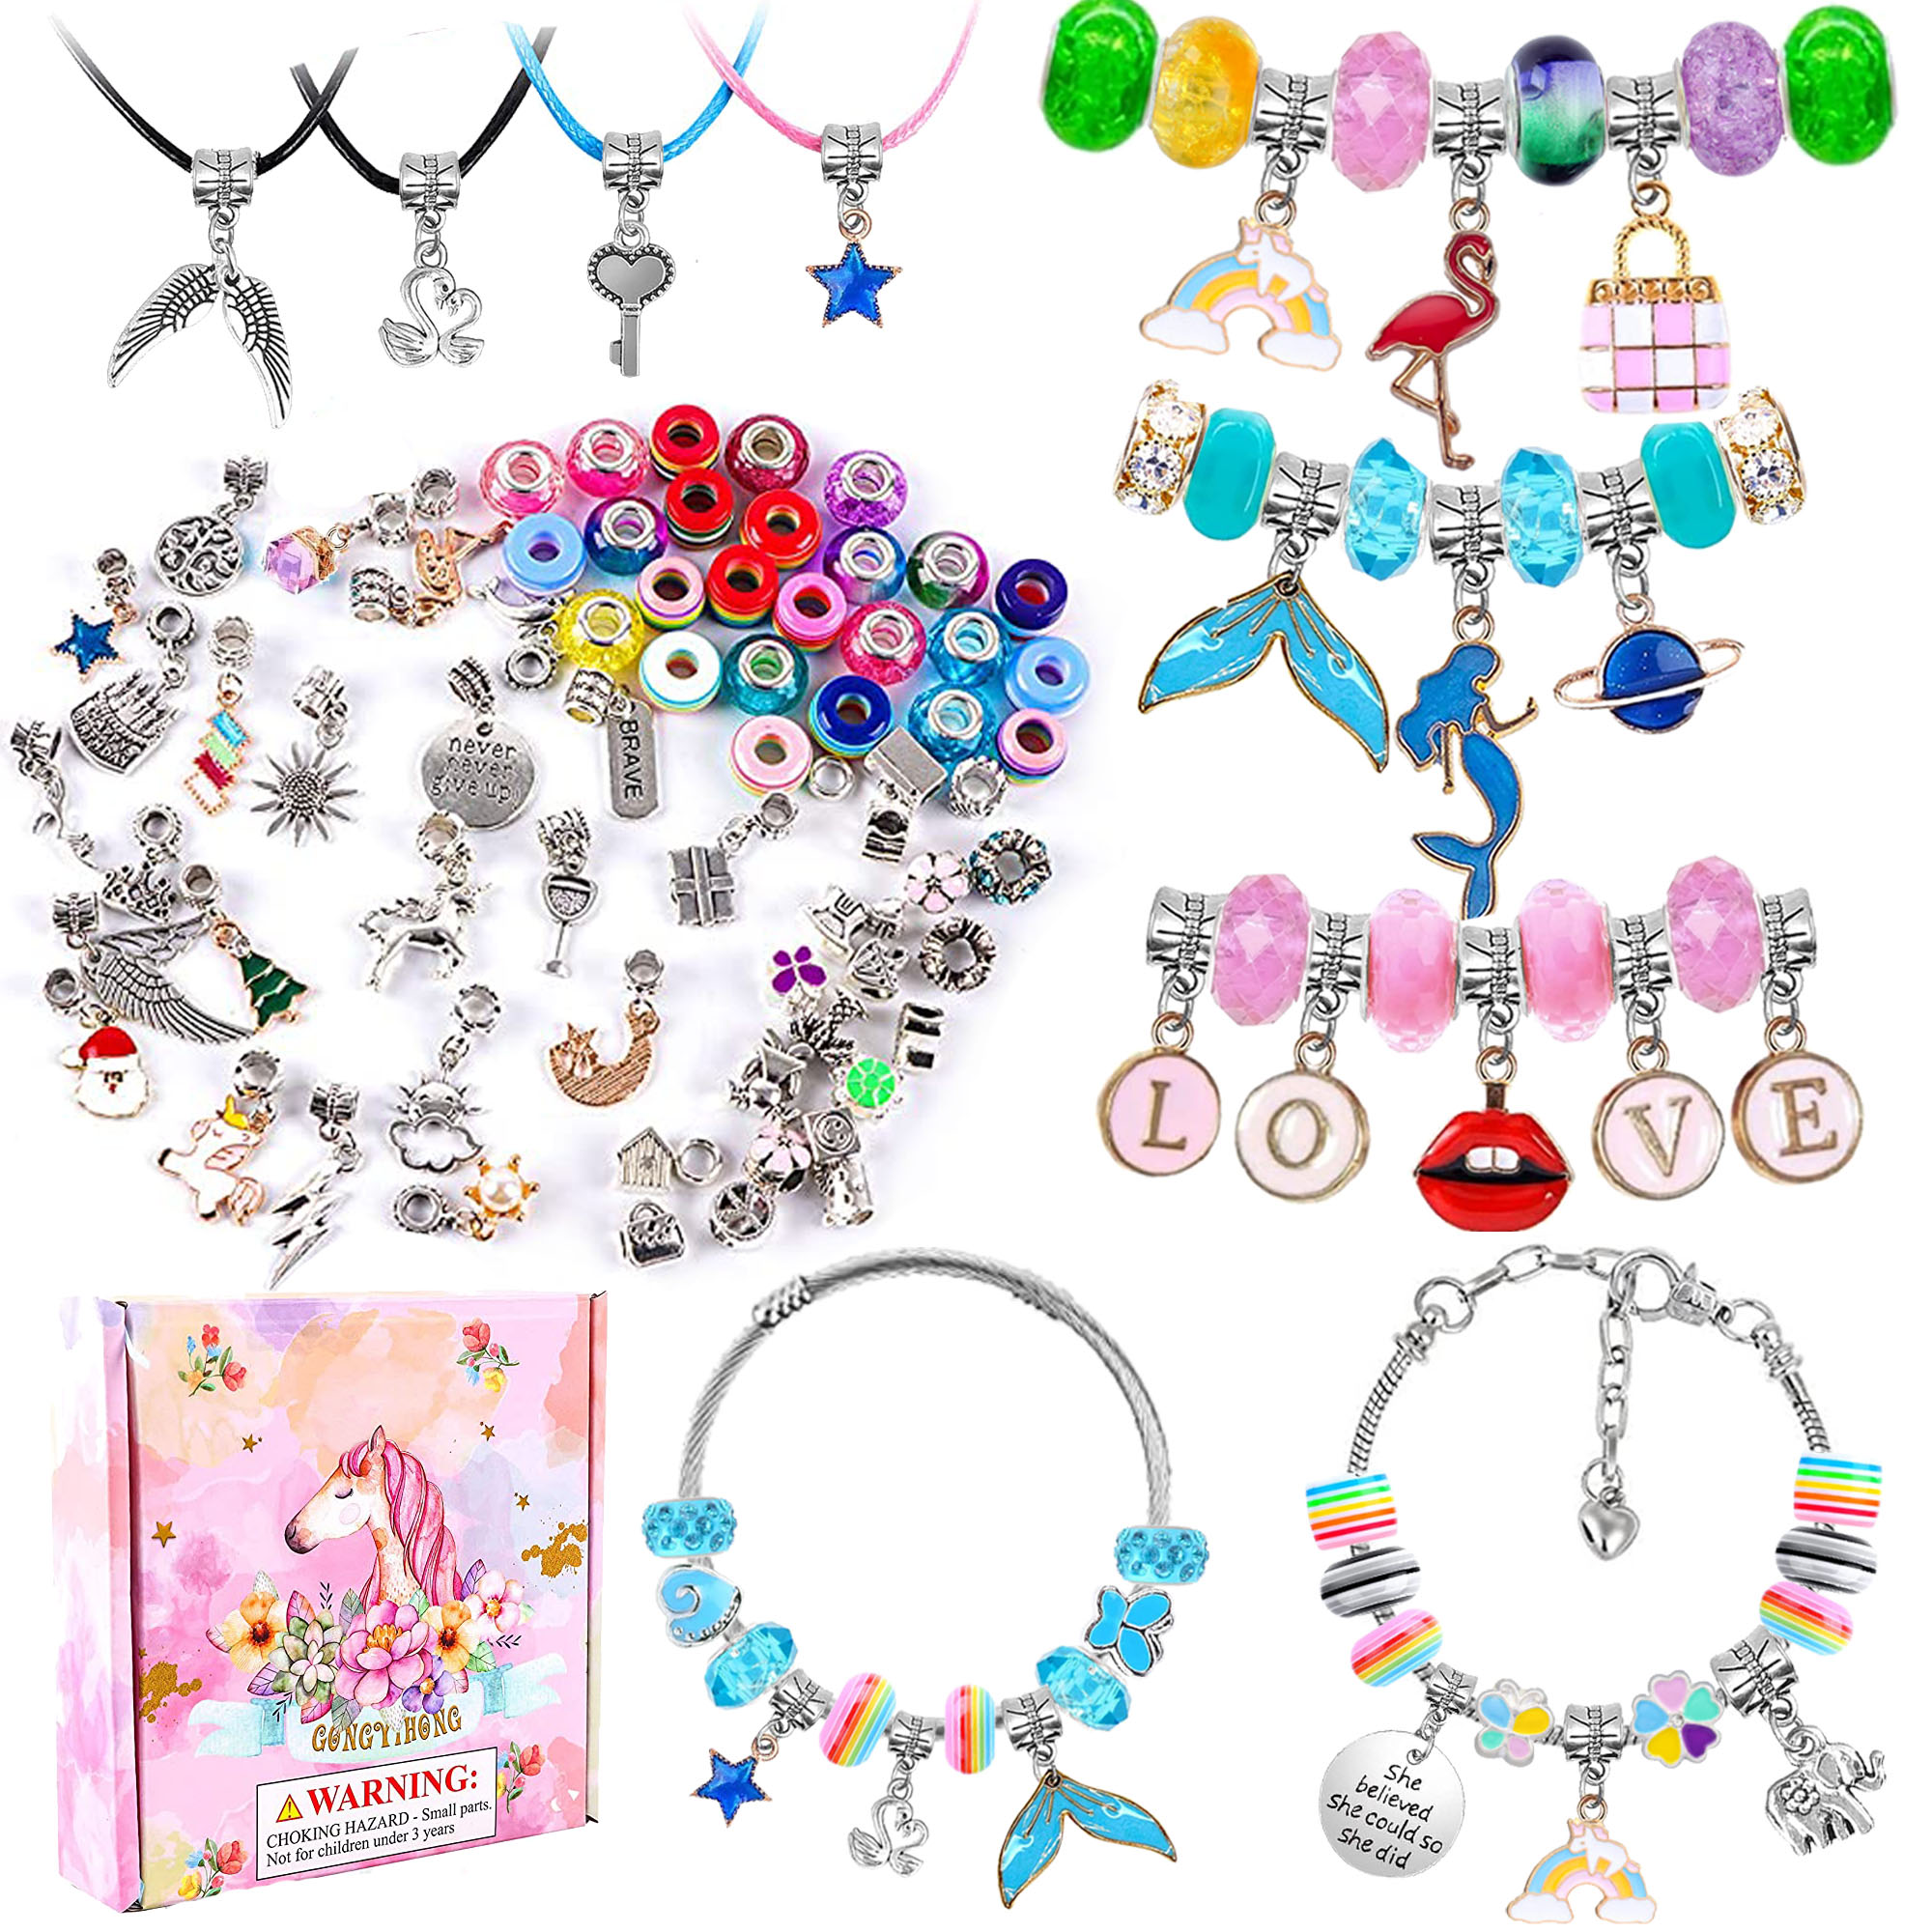 GONGYIHONG Charm Bracelet Making Kit for Girls, Kids' Jewelry Making Kits  Jewelry Making Charms Bracelet Making Set with Bracelet Beads, Jewelry